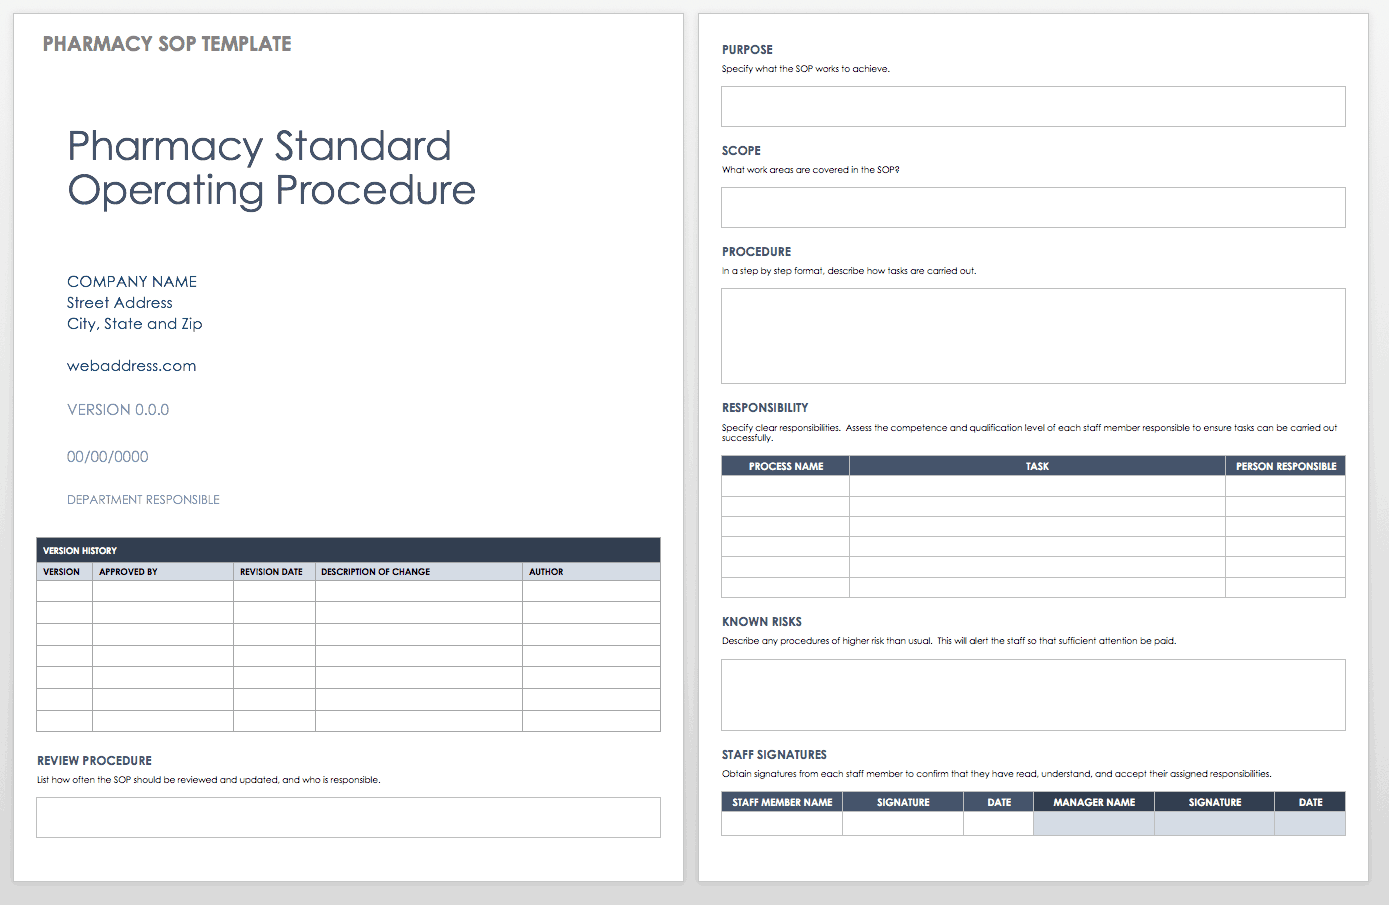 Standard operating procedures manual template free